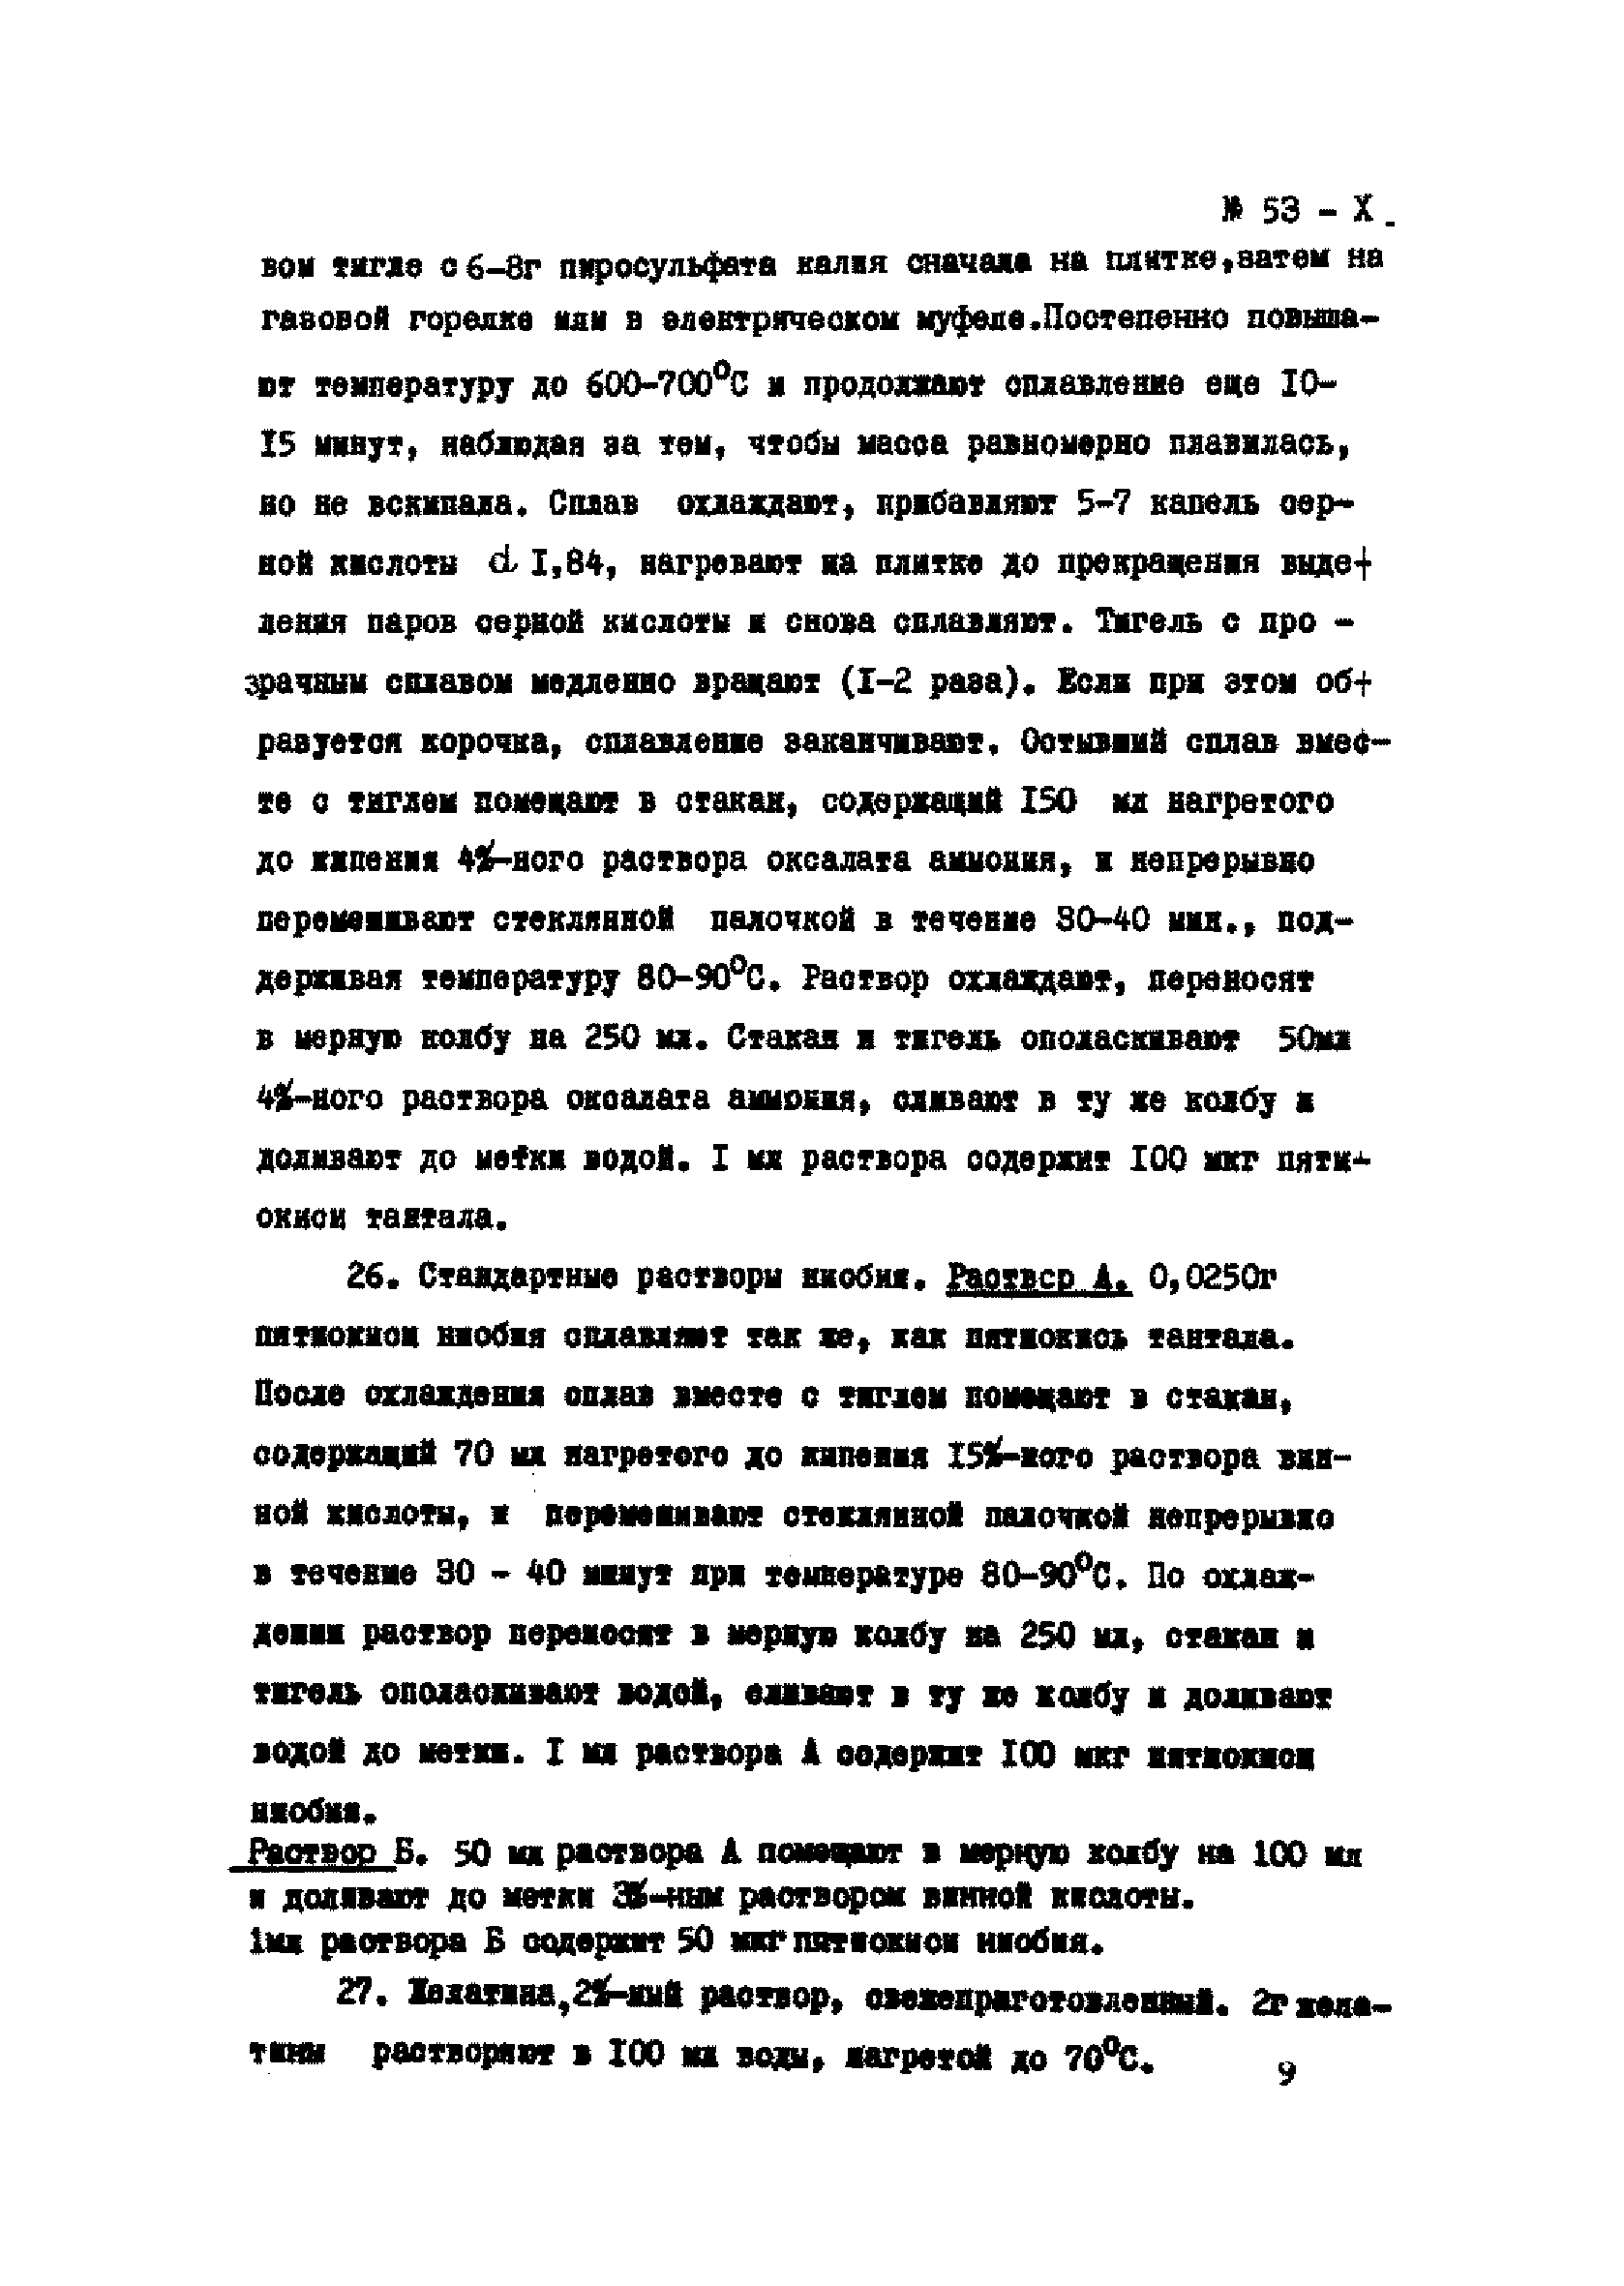 Инструкция НСАМ 53-Х